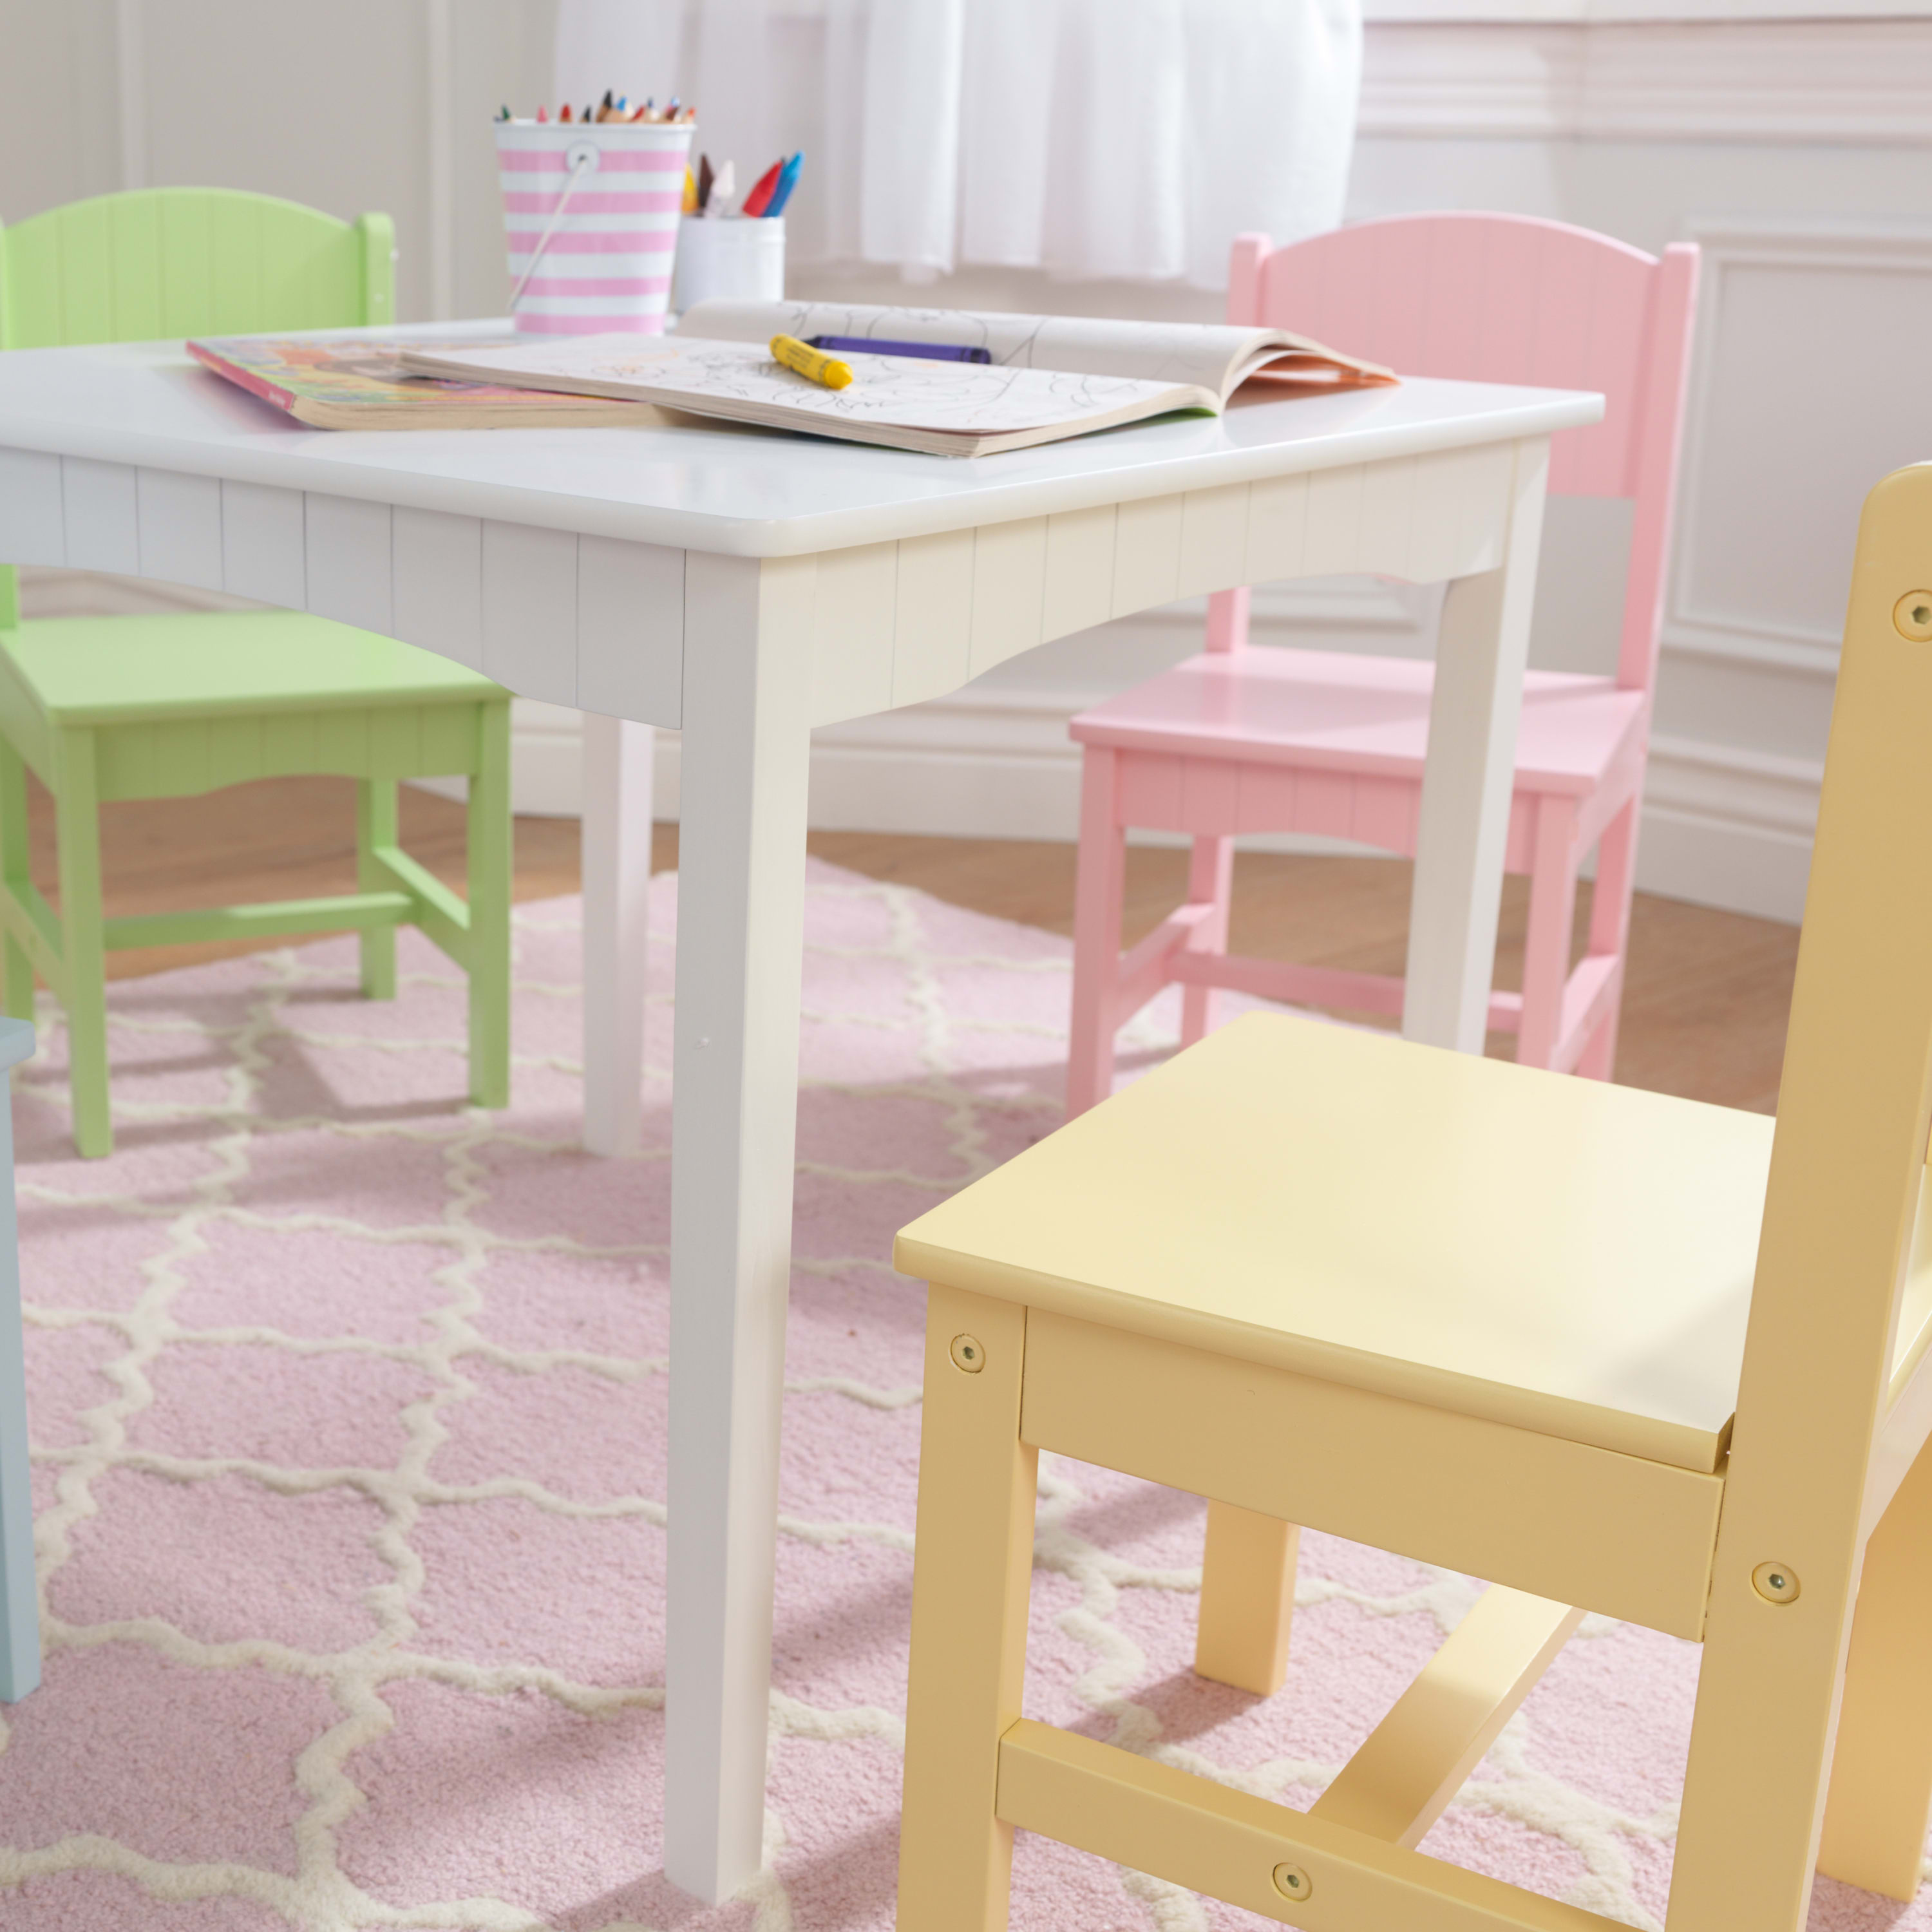 KidKraft Nantucket Children's Wooden Table & 4 Chair Set, Pastel Colors - image 3 of 9